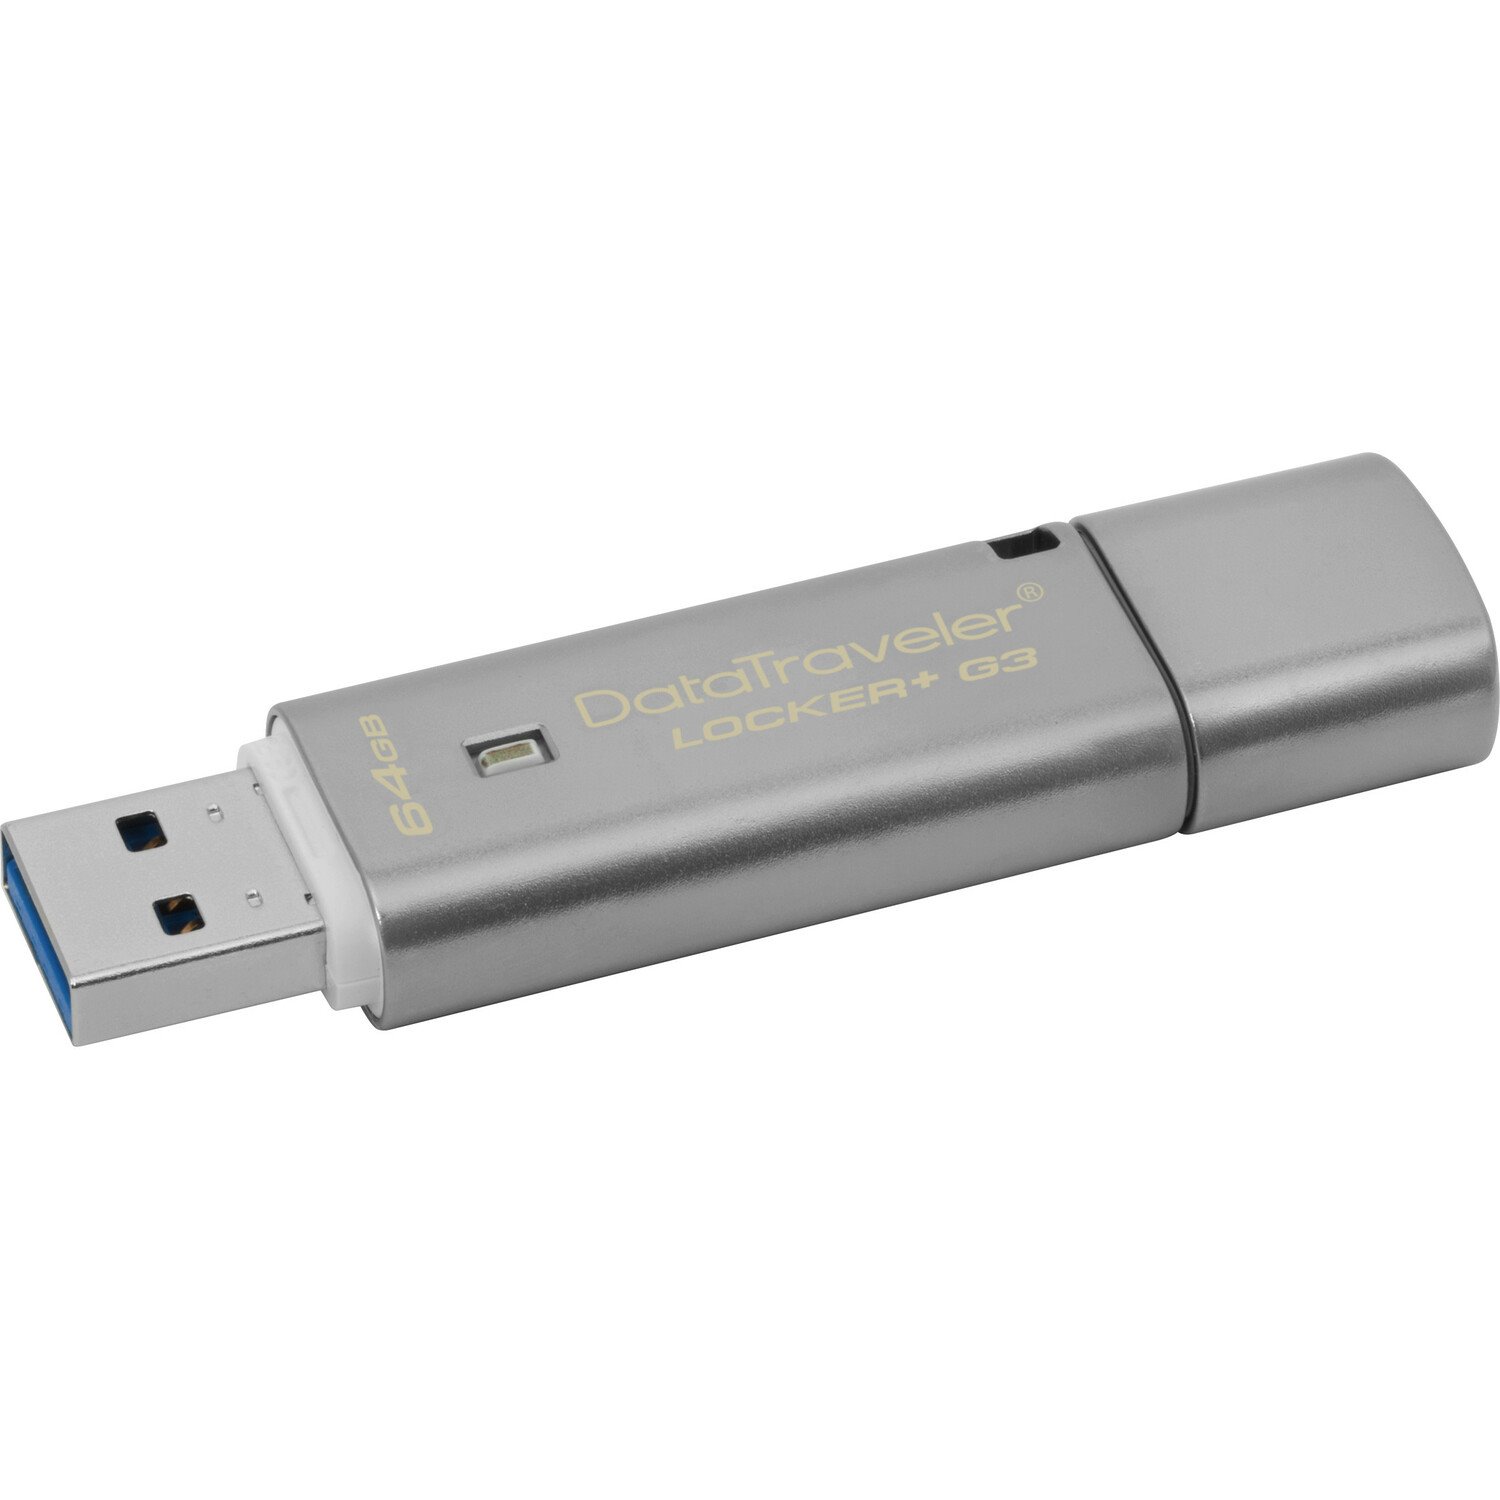 Kingston DataTraveler Locker+ G3 64 GB USB 3.0 Flash Drive - Silver